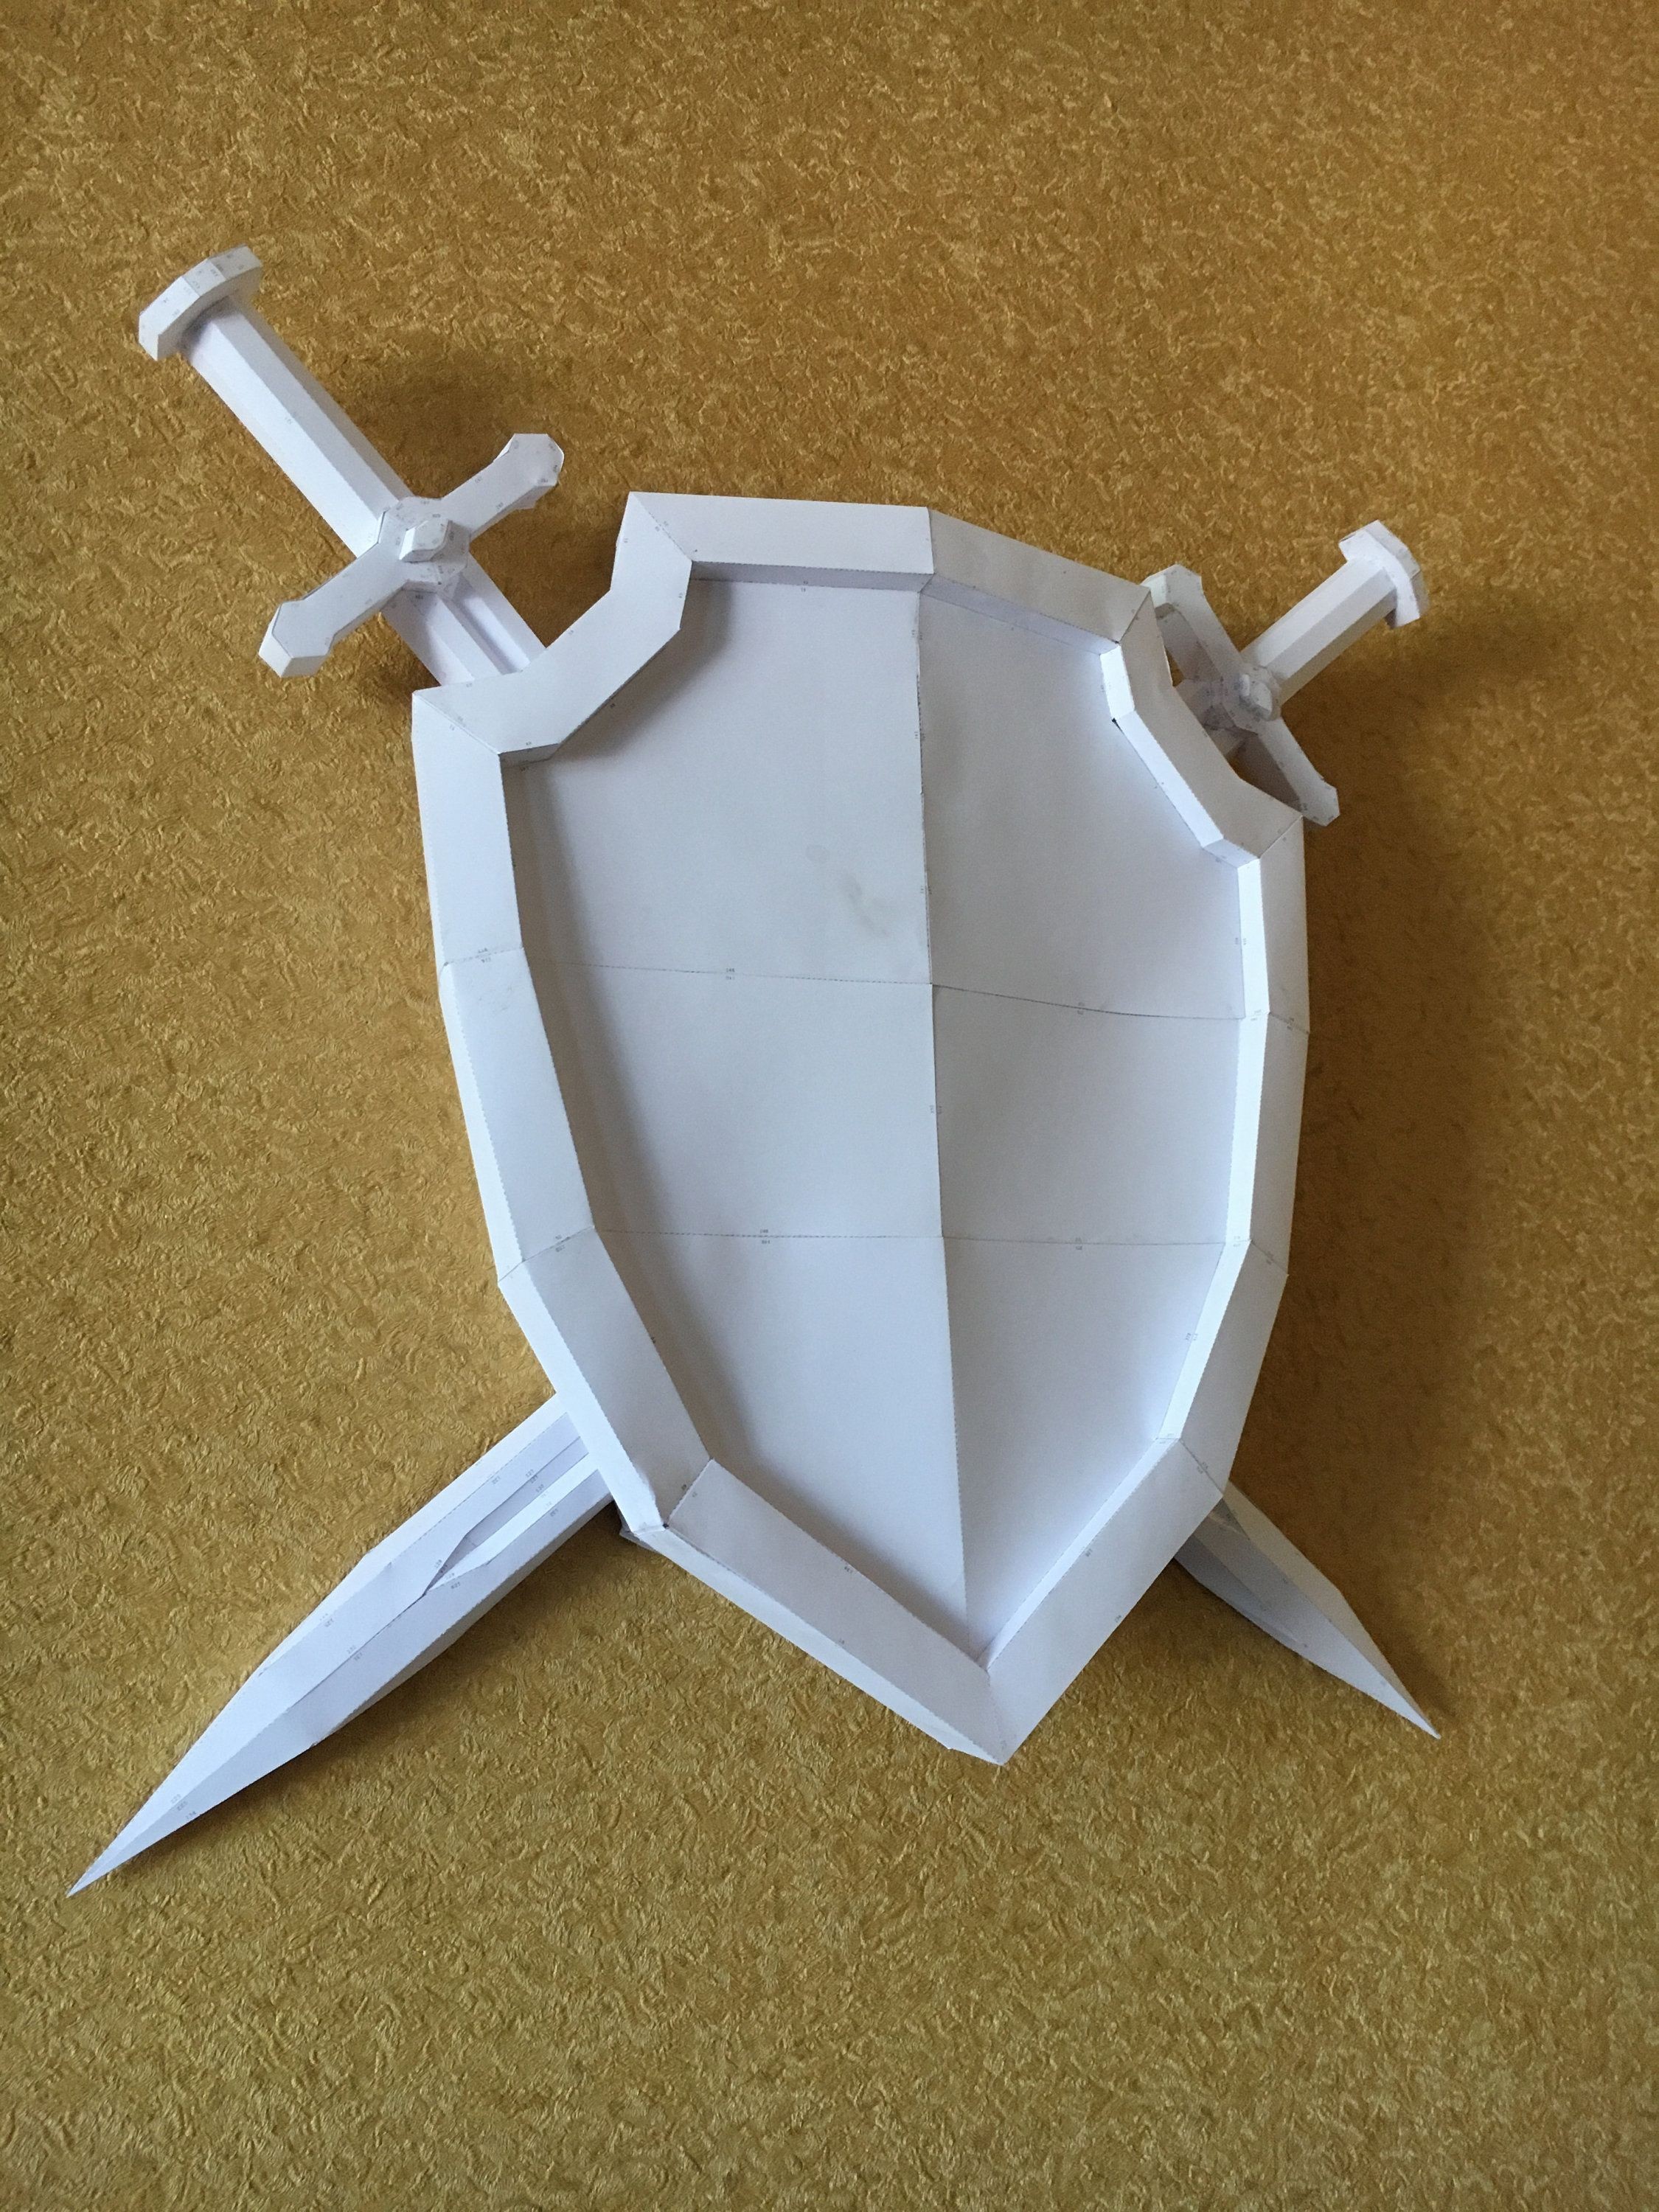 Papercraft Dice Sword Shield Diy Papercraft Model ÐÑÐ¼Ð°Ð¶Ð½ÑÐµ Ð¸Ð·Ð´ÐµÐ Ð¸Ñ